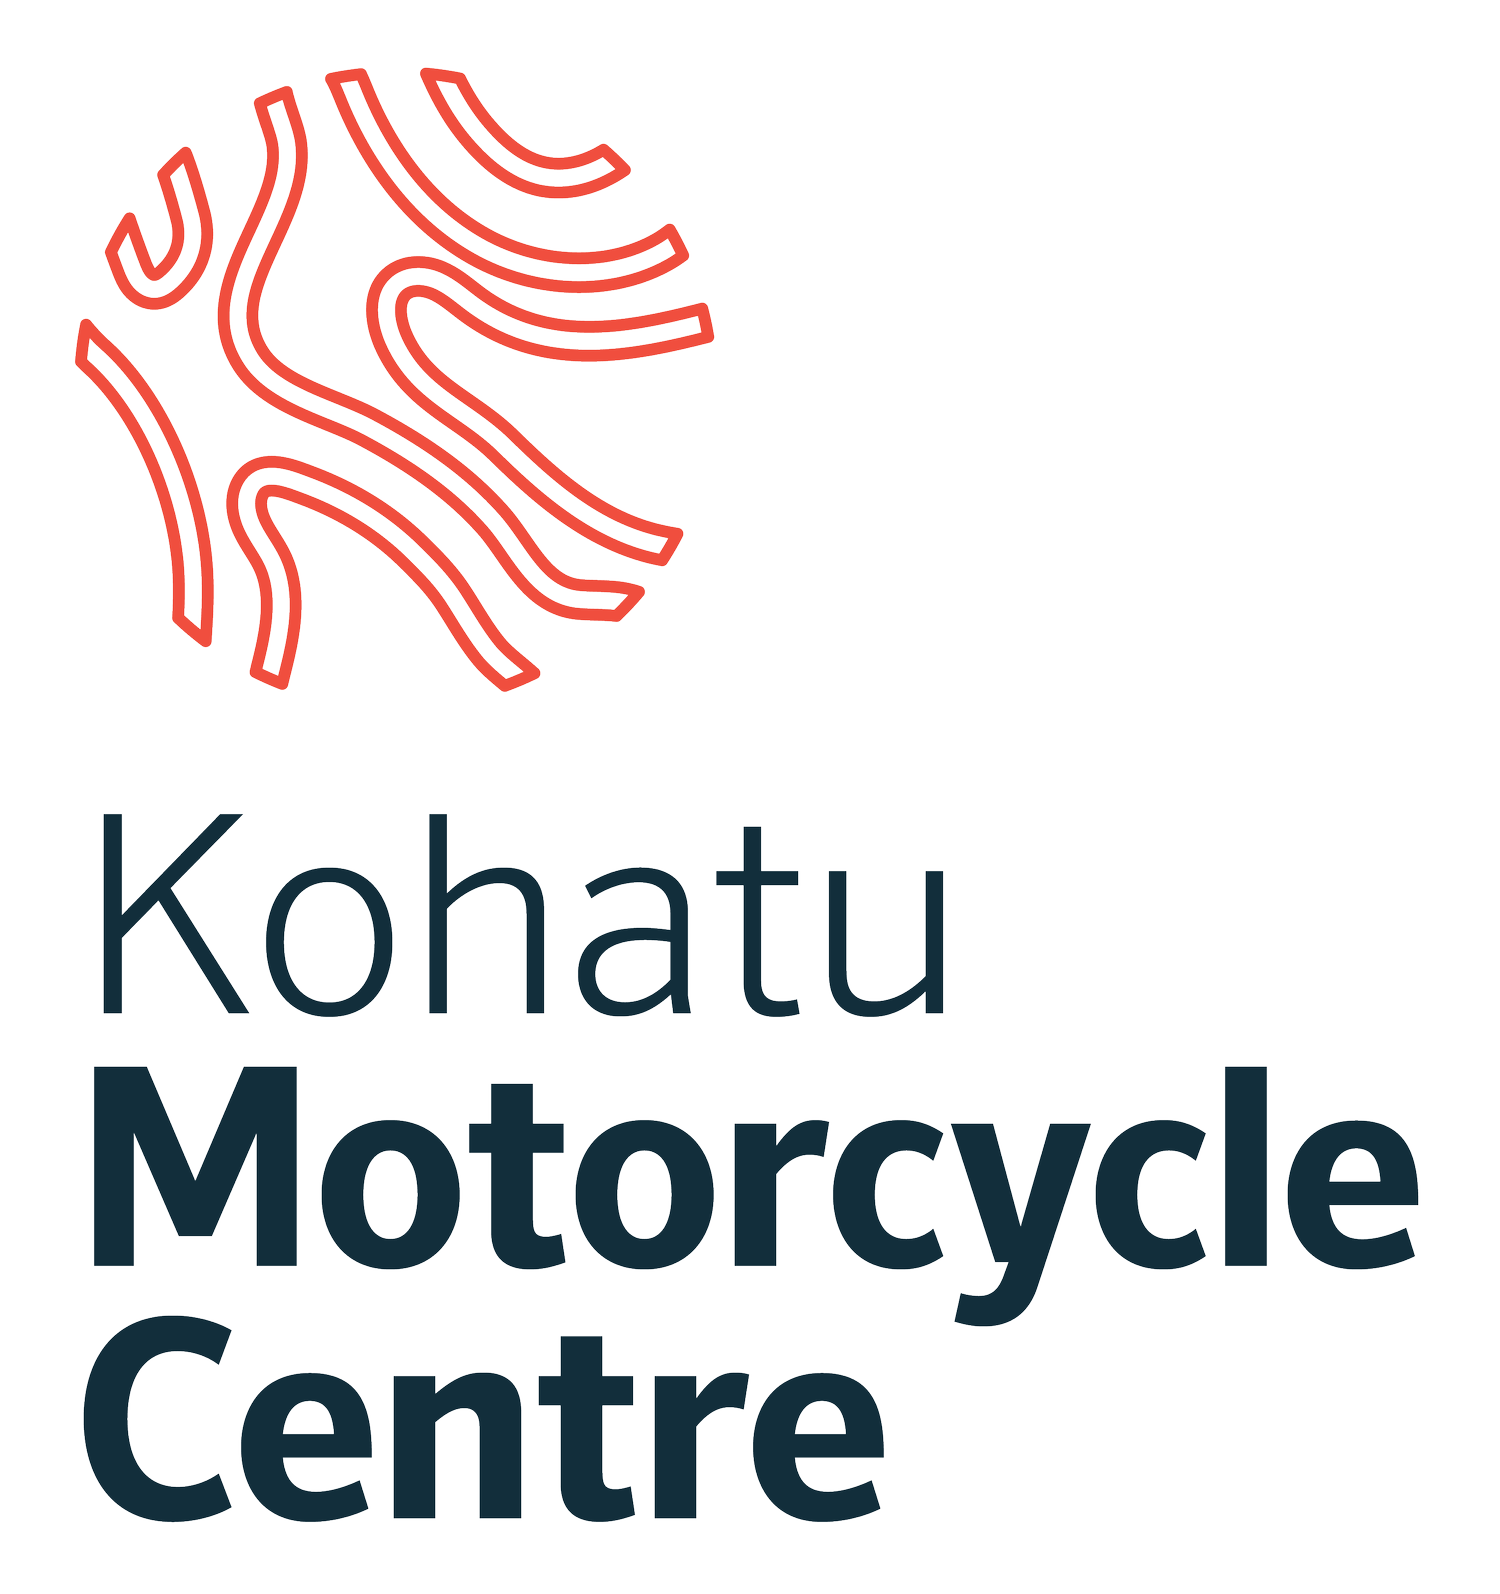 Kohatu Motorcycle Centre